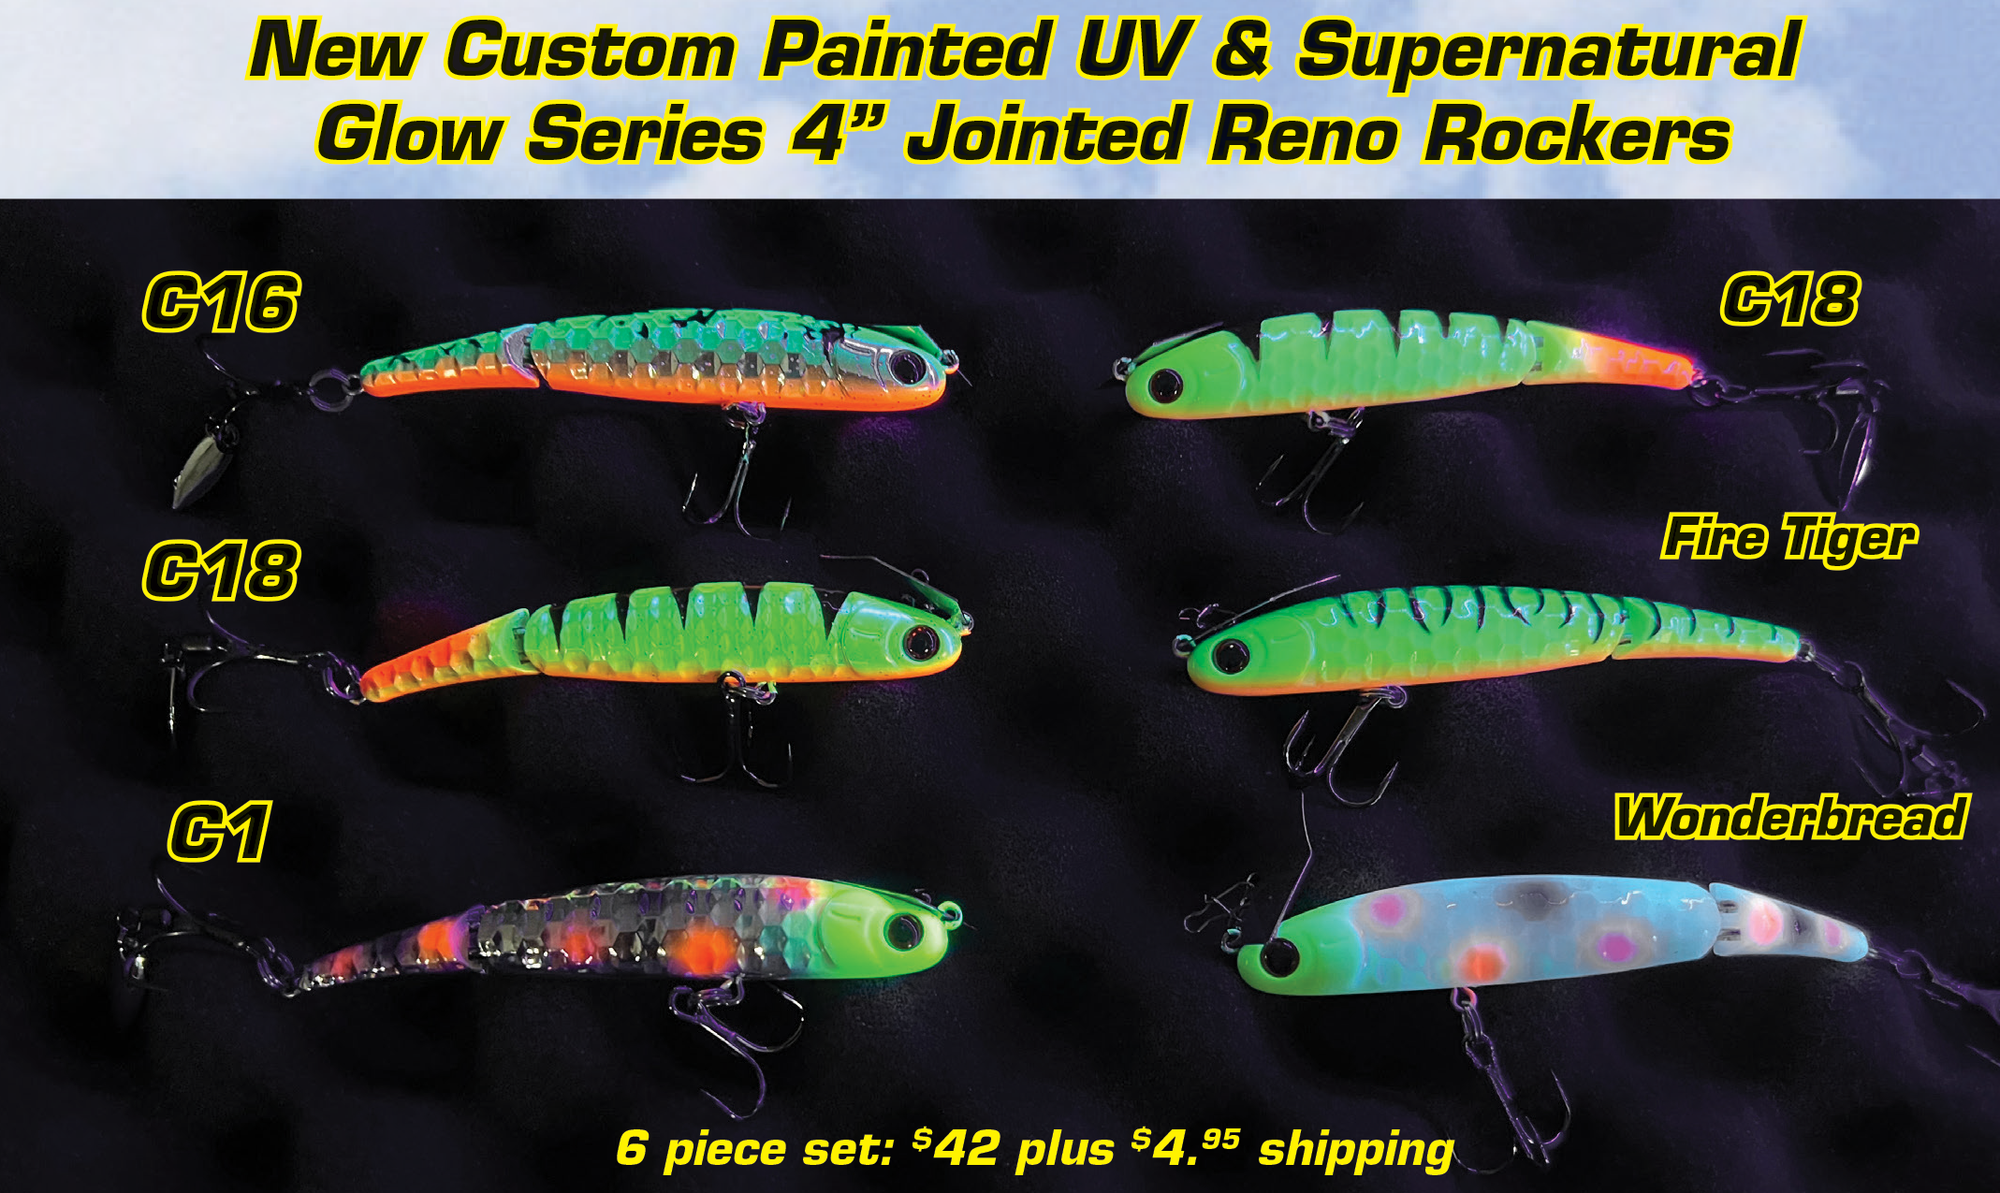 Custom Painted UV & Supernatural  Glow Series 4” Jointed Reno Rockers 6 piece kit